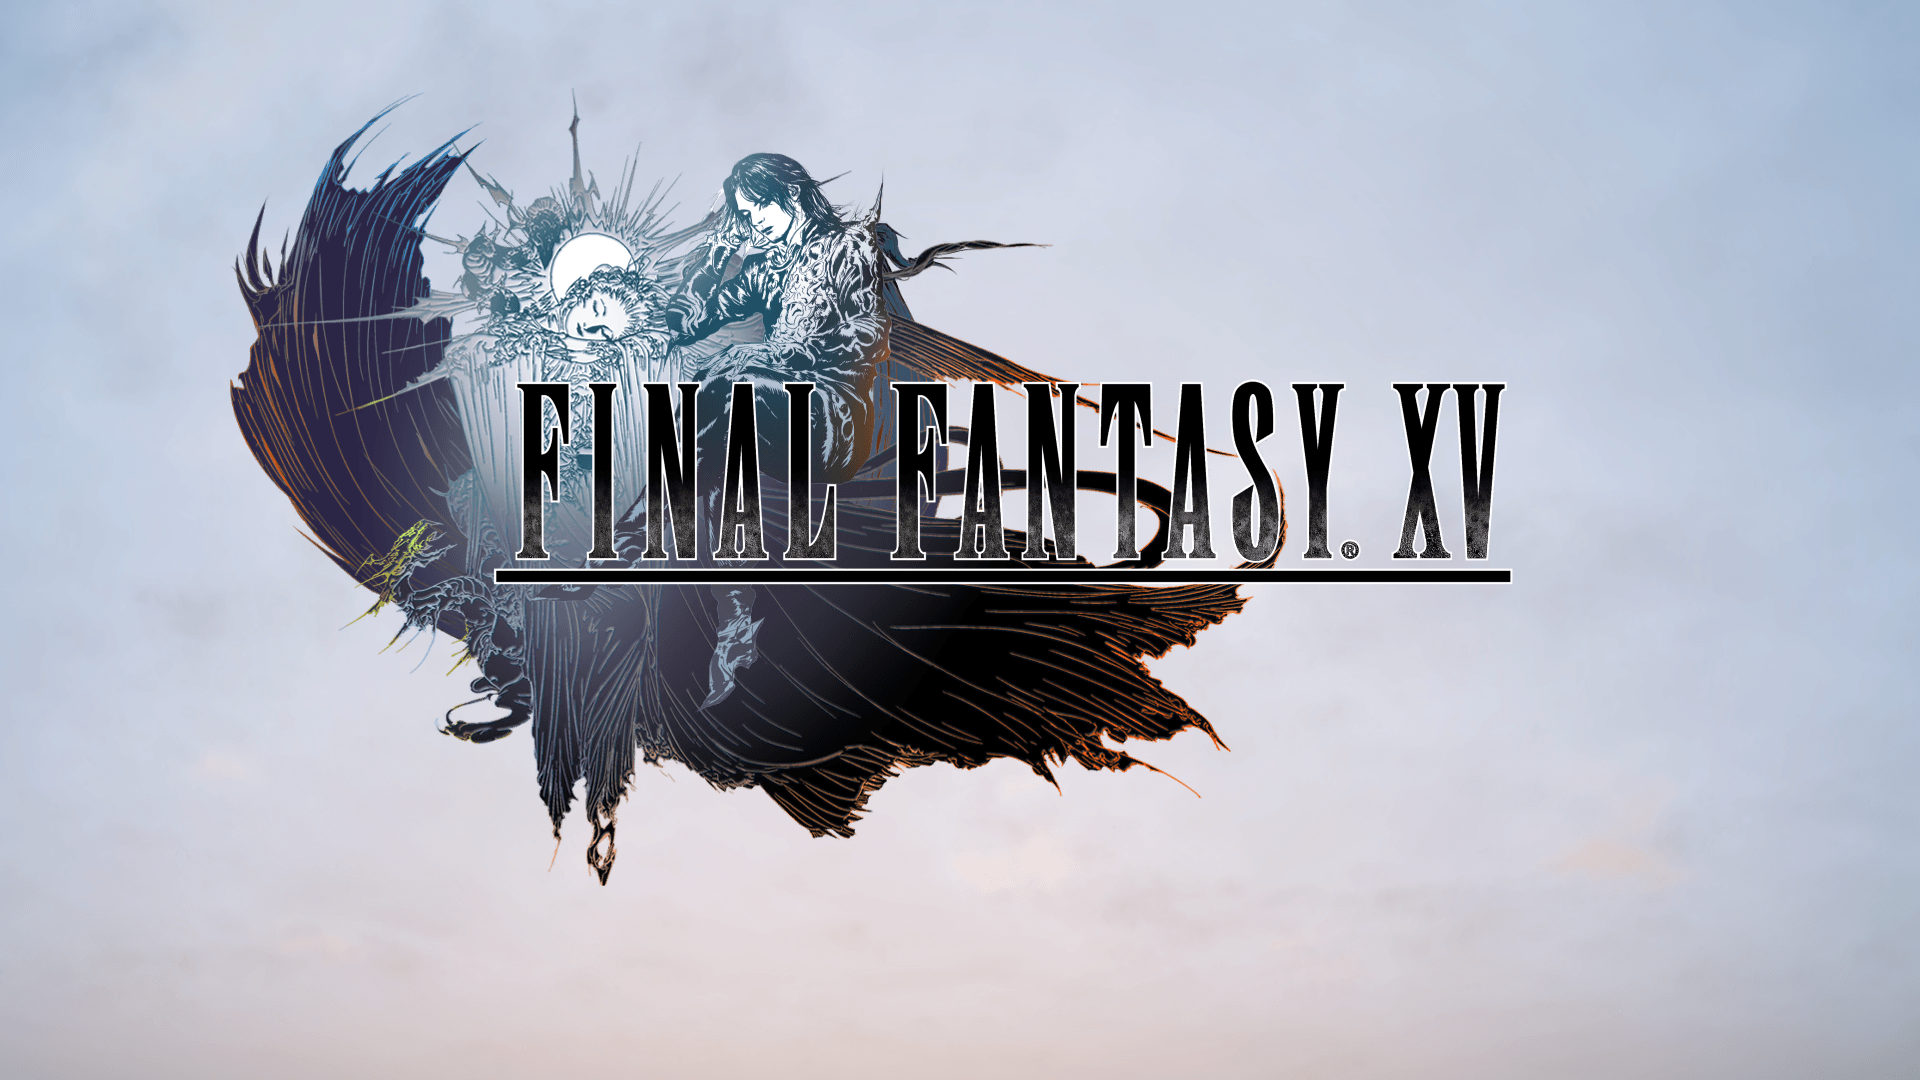 spoiler A wallpaper for Final Fantasy XV